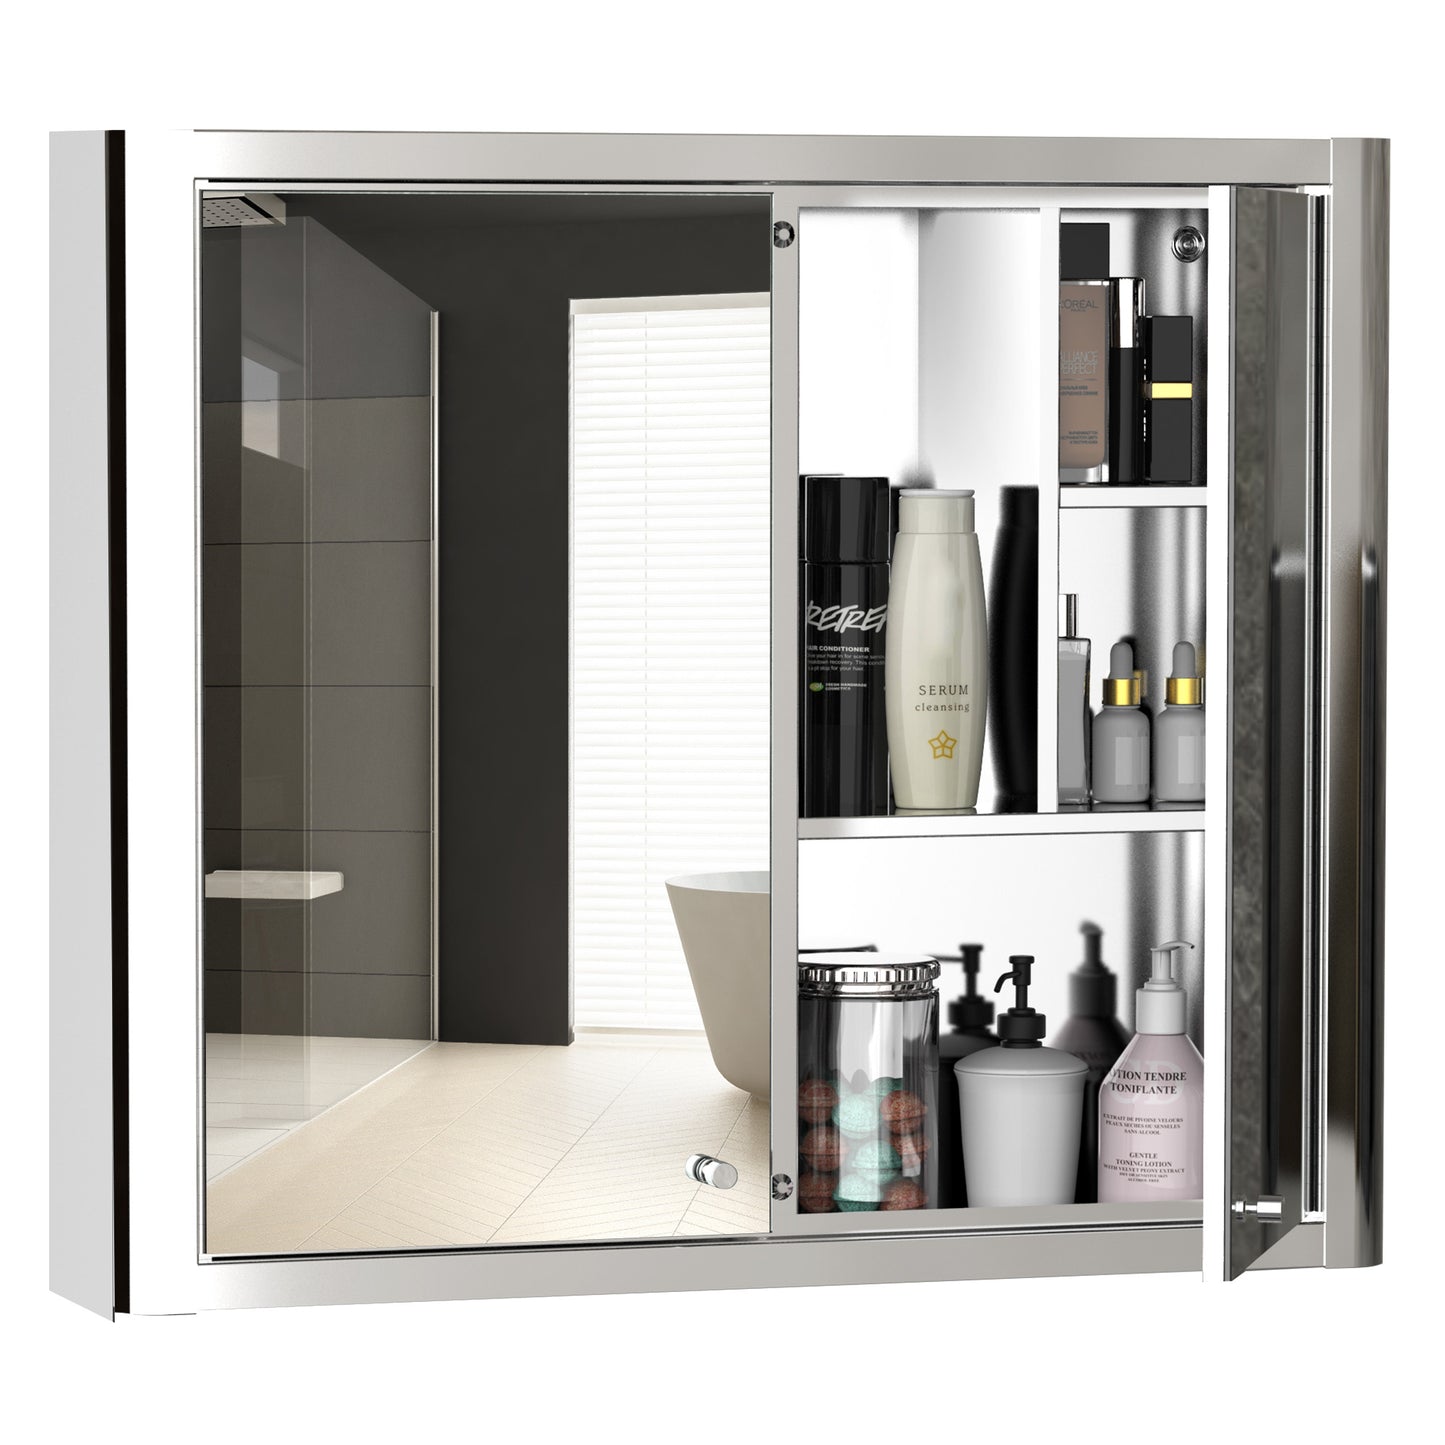 kleankin Bathroom Mirror Cabinet Wall Mount Storage Cupboard W/ Double Door and Shelf